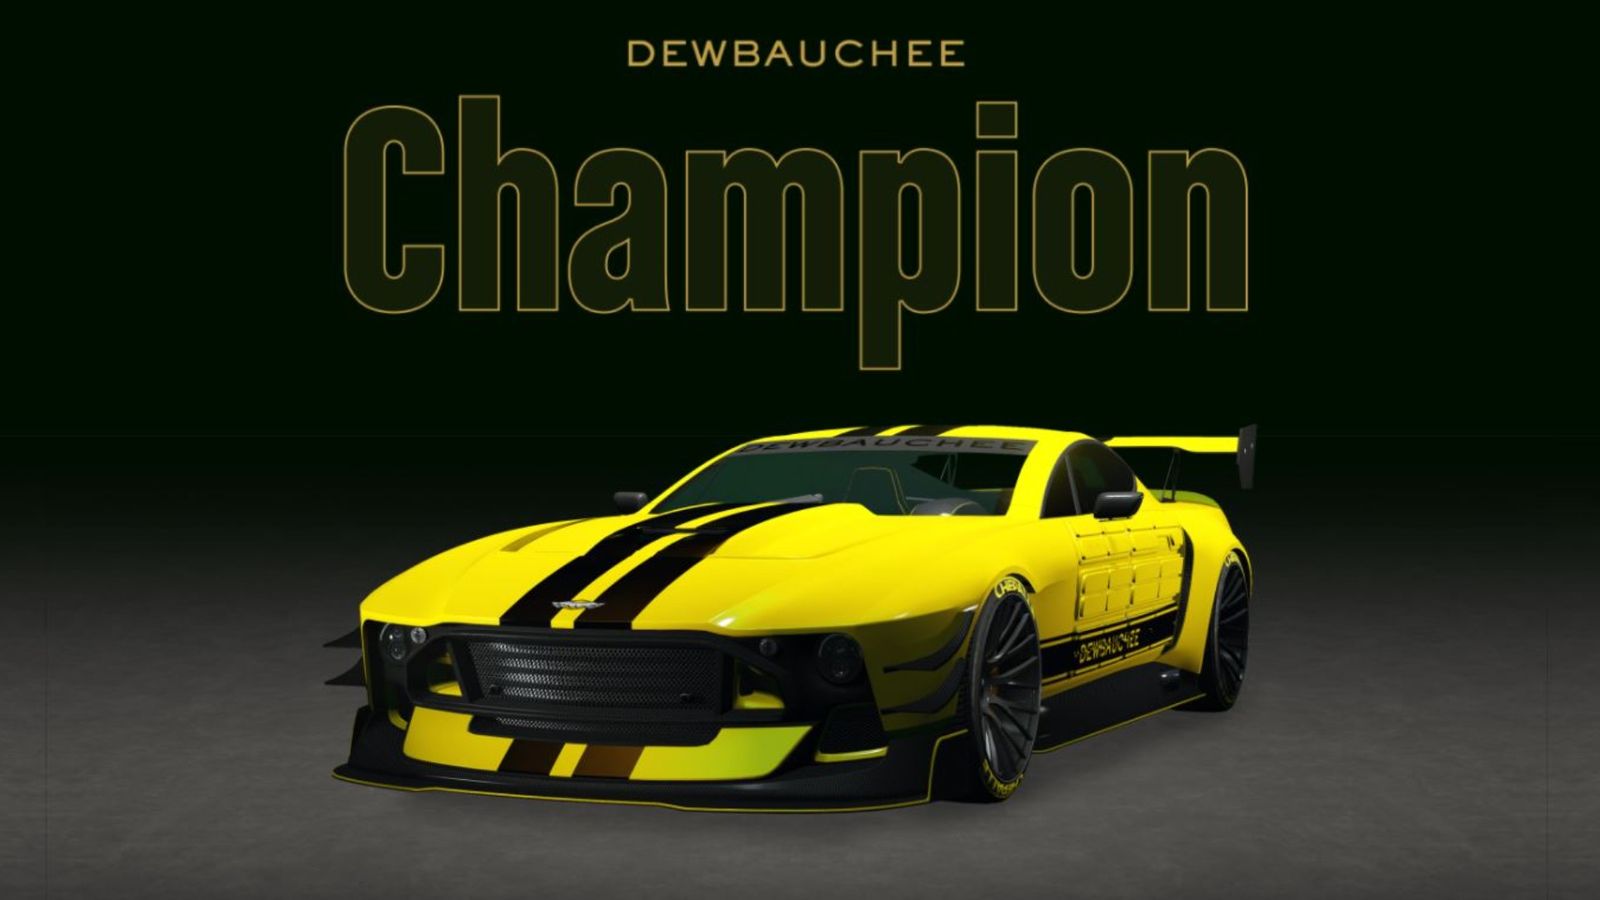 GTA Online Dewbauchee Champion in Yellow